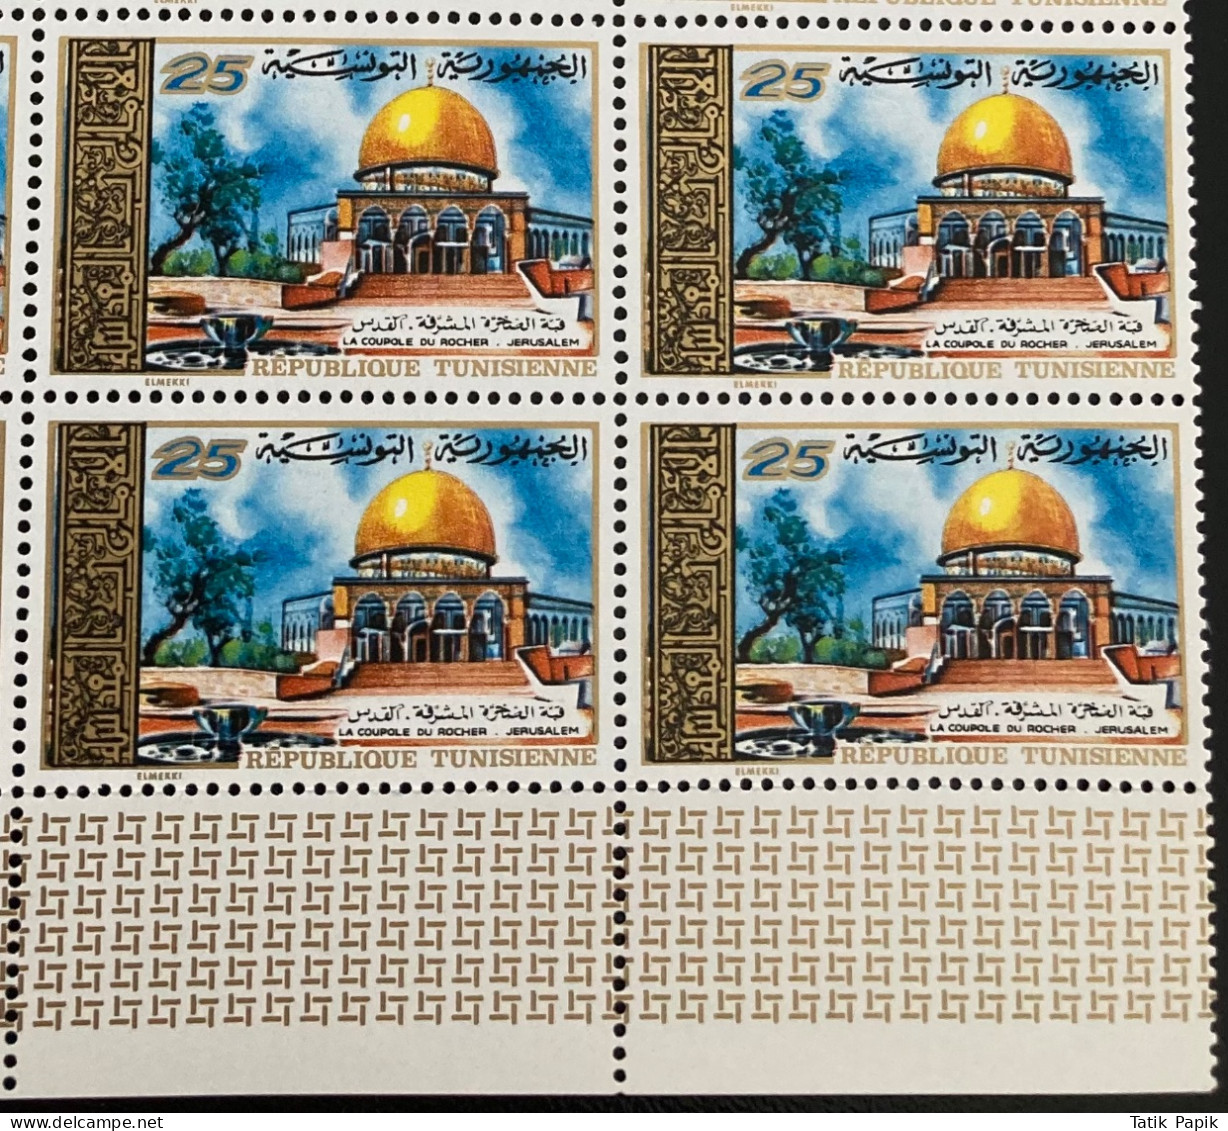 1973 Tunisie Tunisia Jerusalem Palestine Dome Rock Gold Mosque Olive Peace Jewish Israel Bloc 4 Sheet Border Al Quds - Tunisia